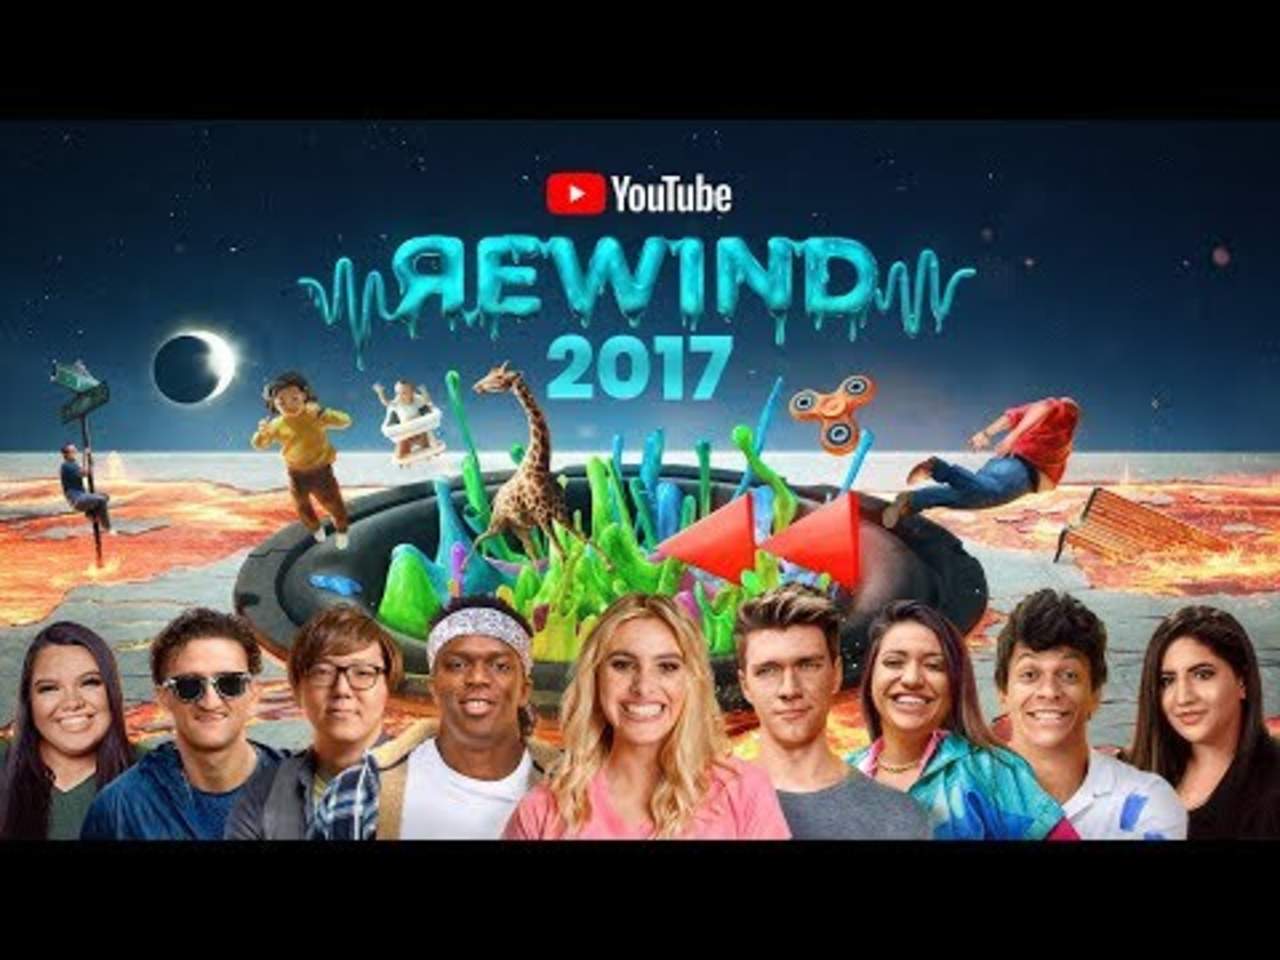 Llega el Youtube Rewind 2017